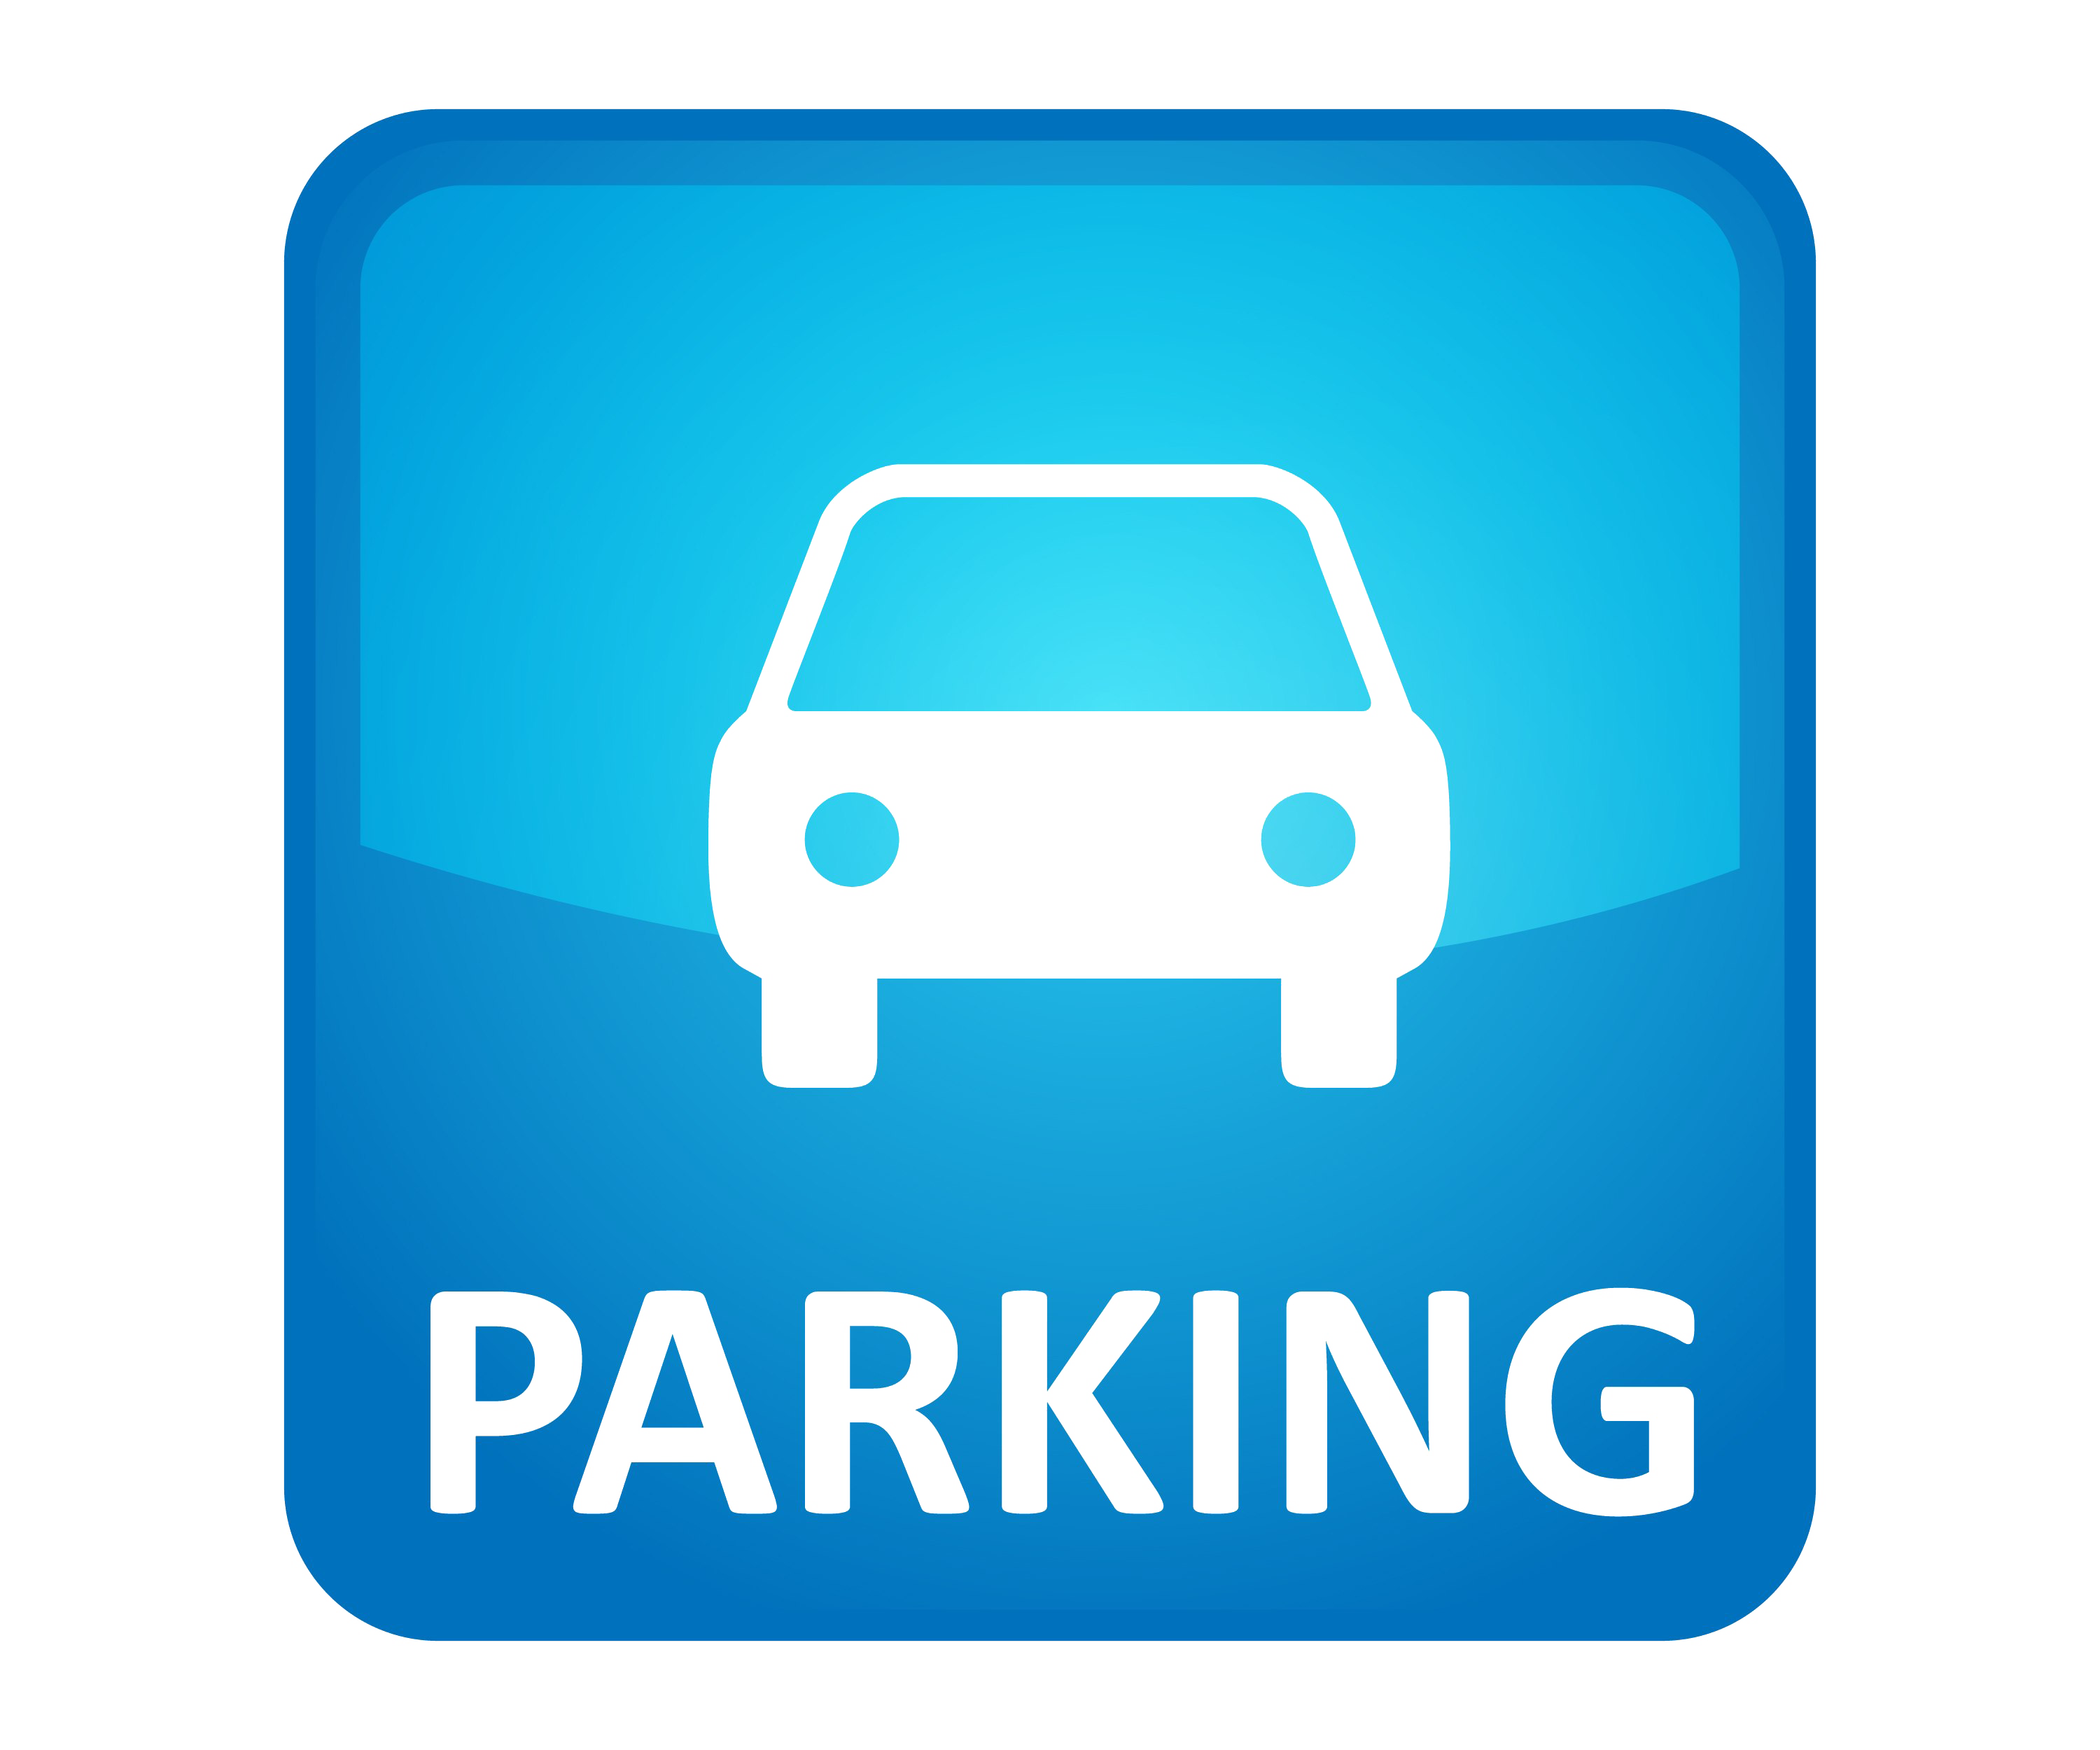 Multiple car icon. Car park symbol isolated